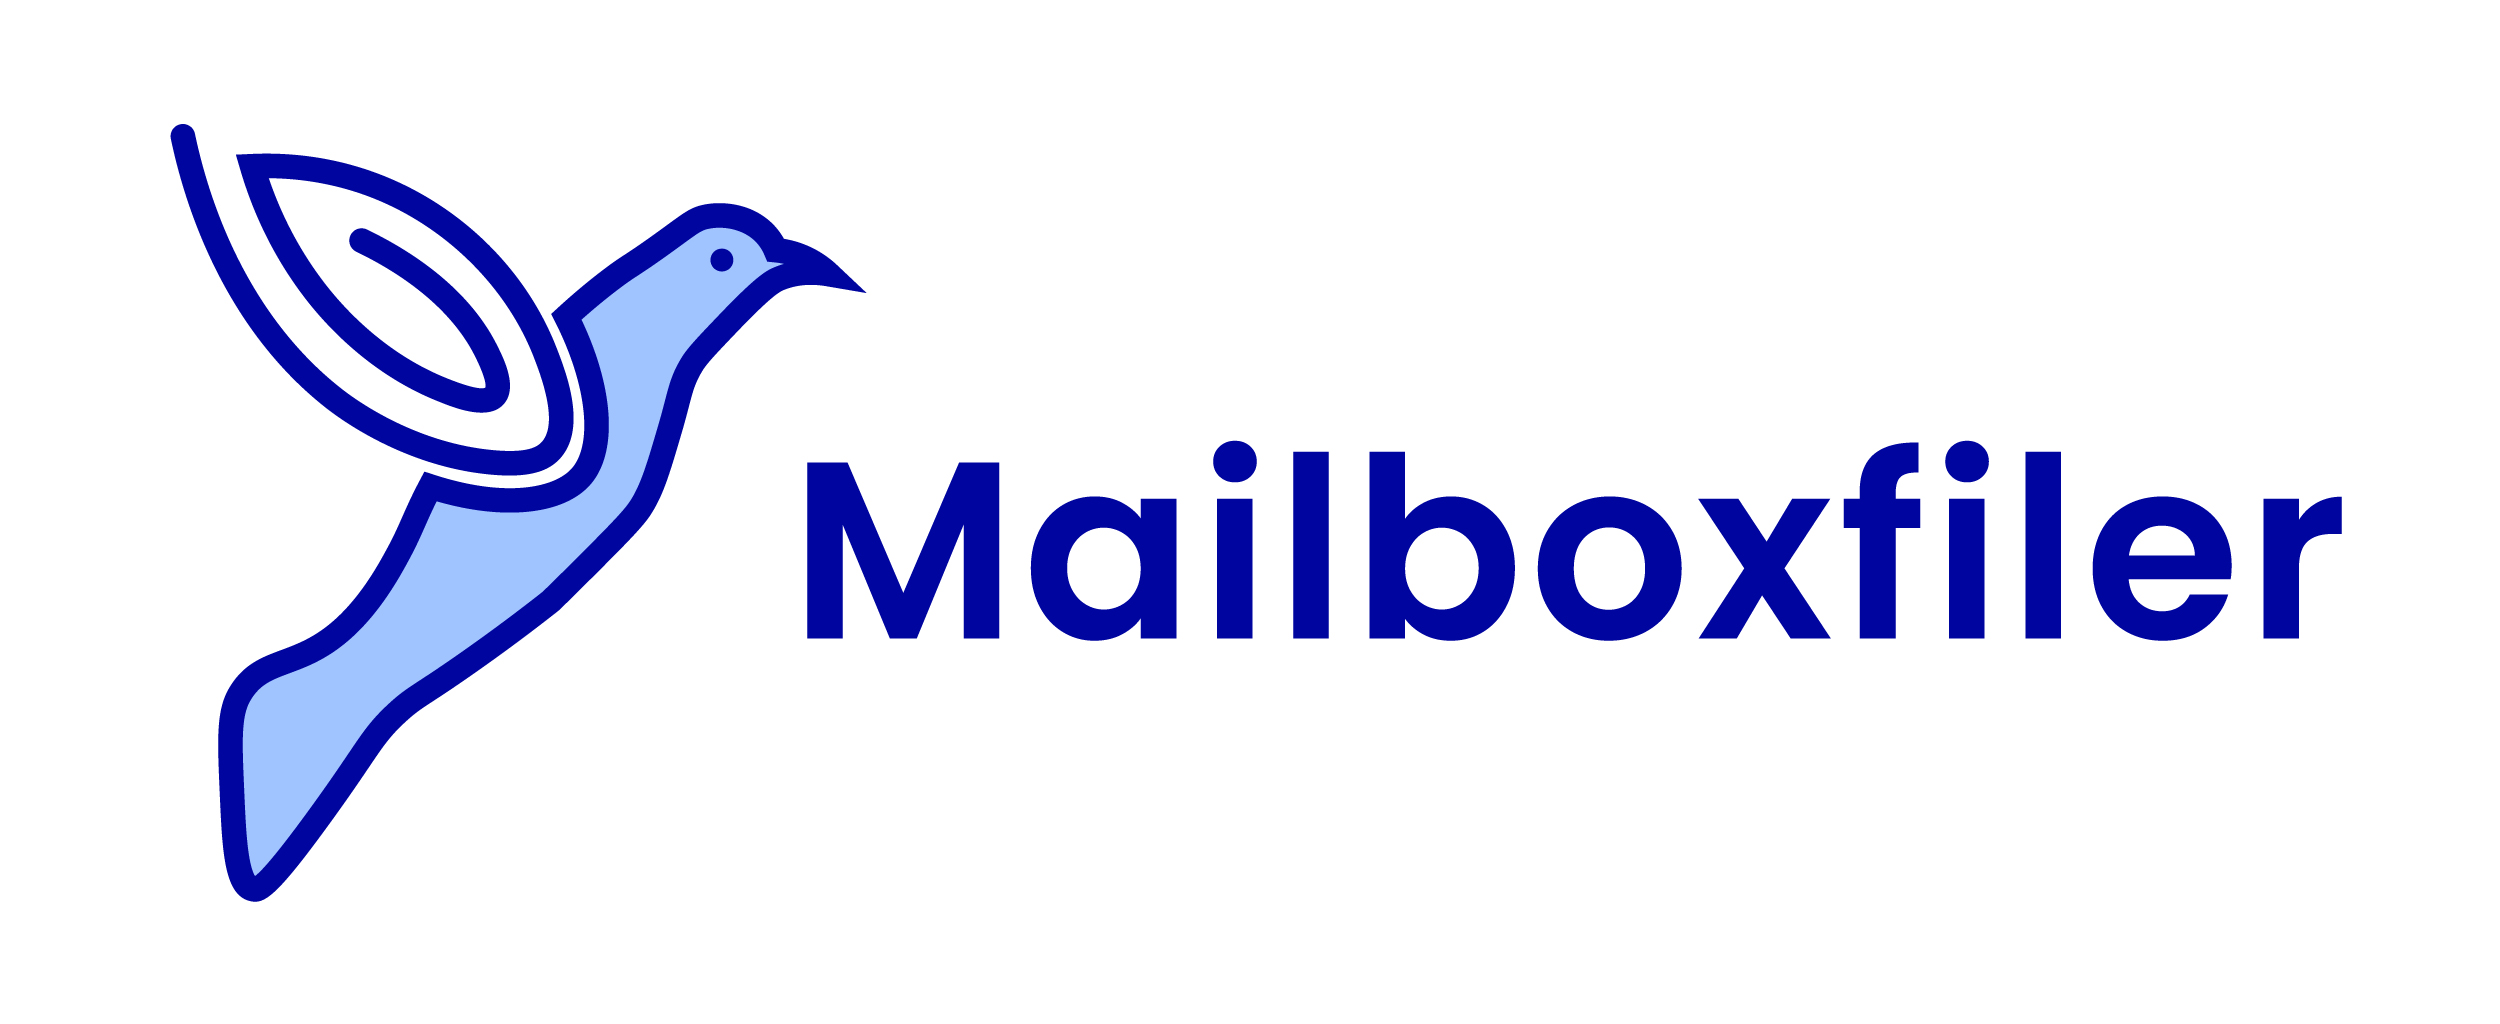 Mailboxfiler